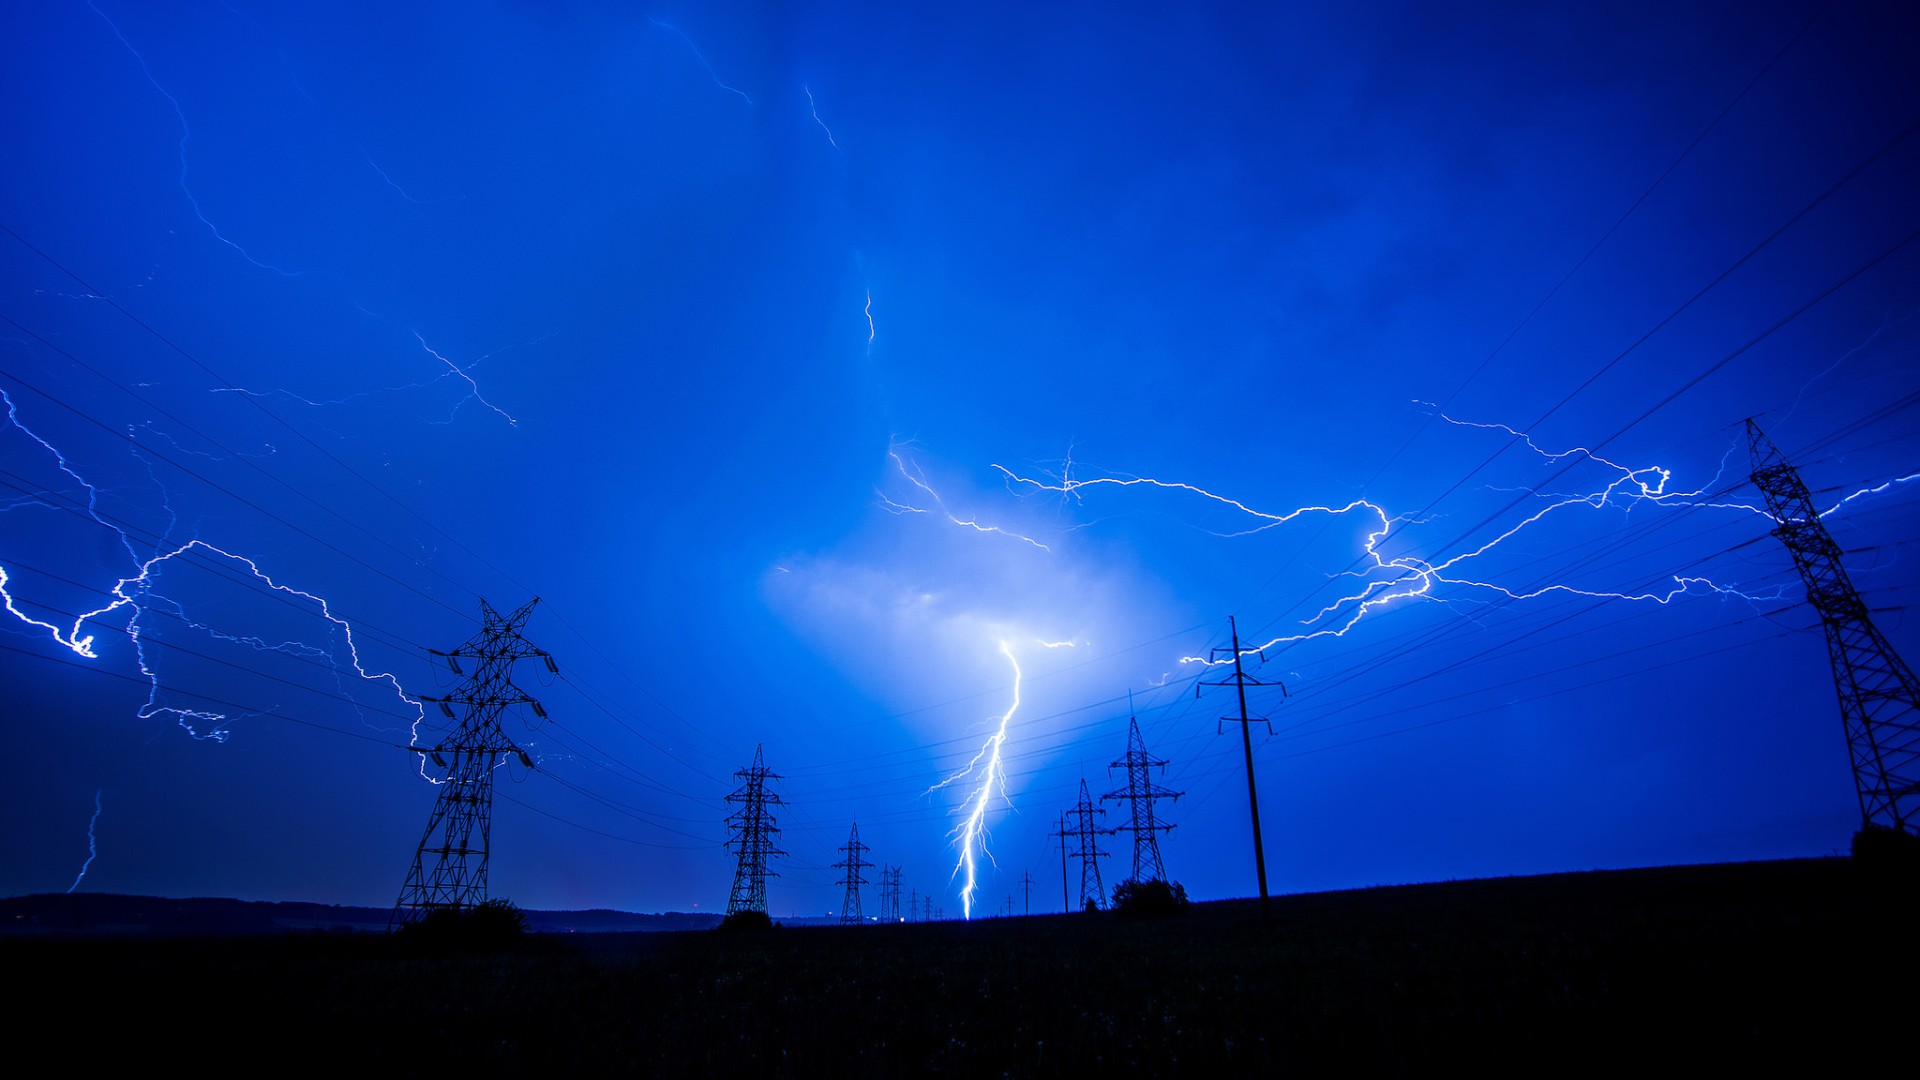 General 1920x1080 landscape lightning storm dark utility pole electricity long exposure power lines overcast blue field night pylon